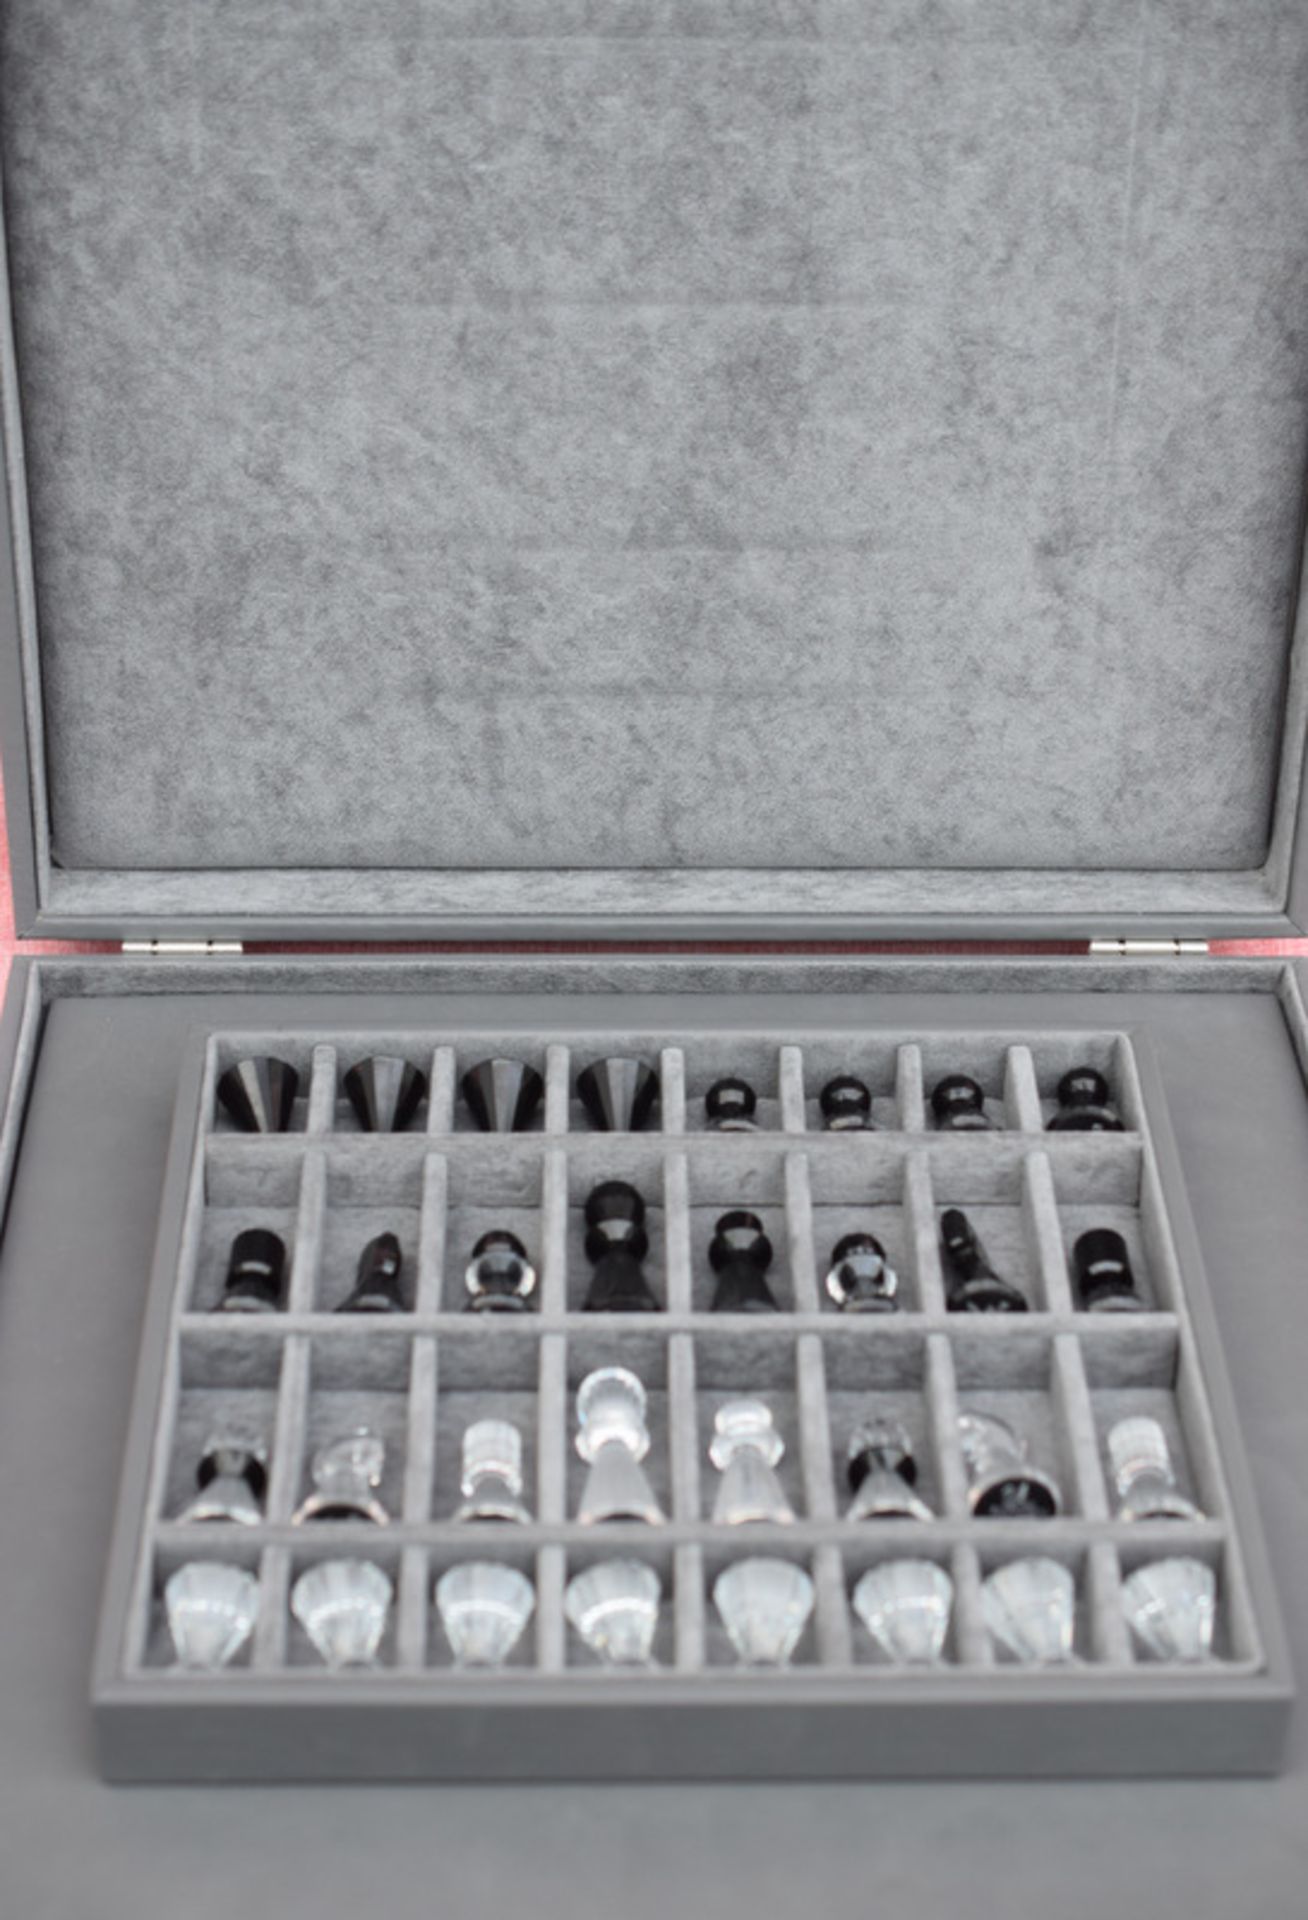 Swarovski Silver Crystal Chess Set Like New In Box - Image 10 of 10